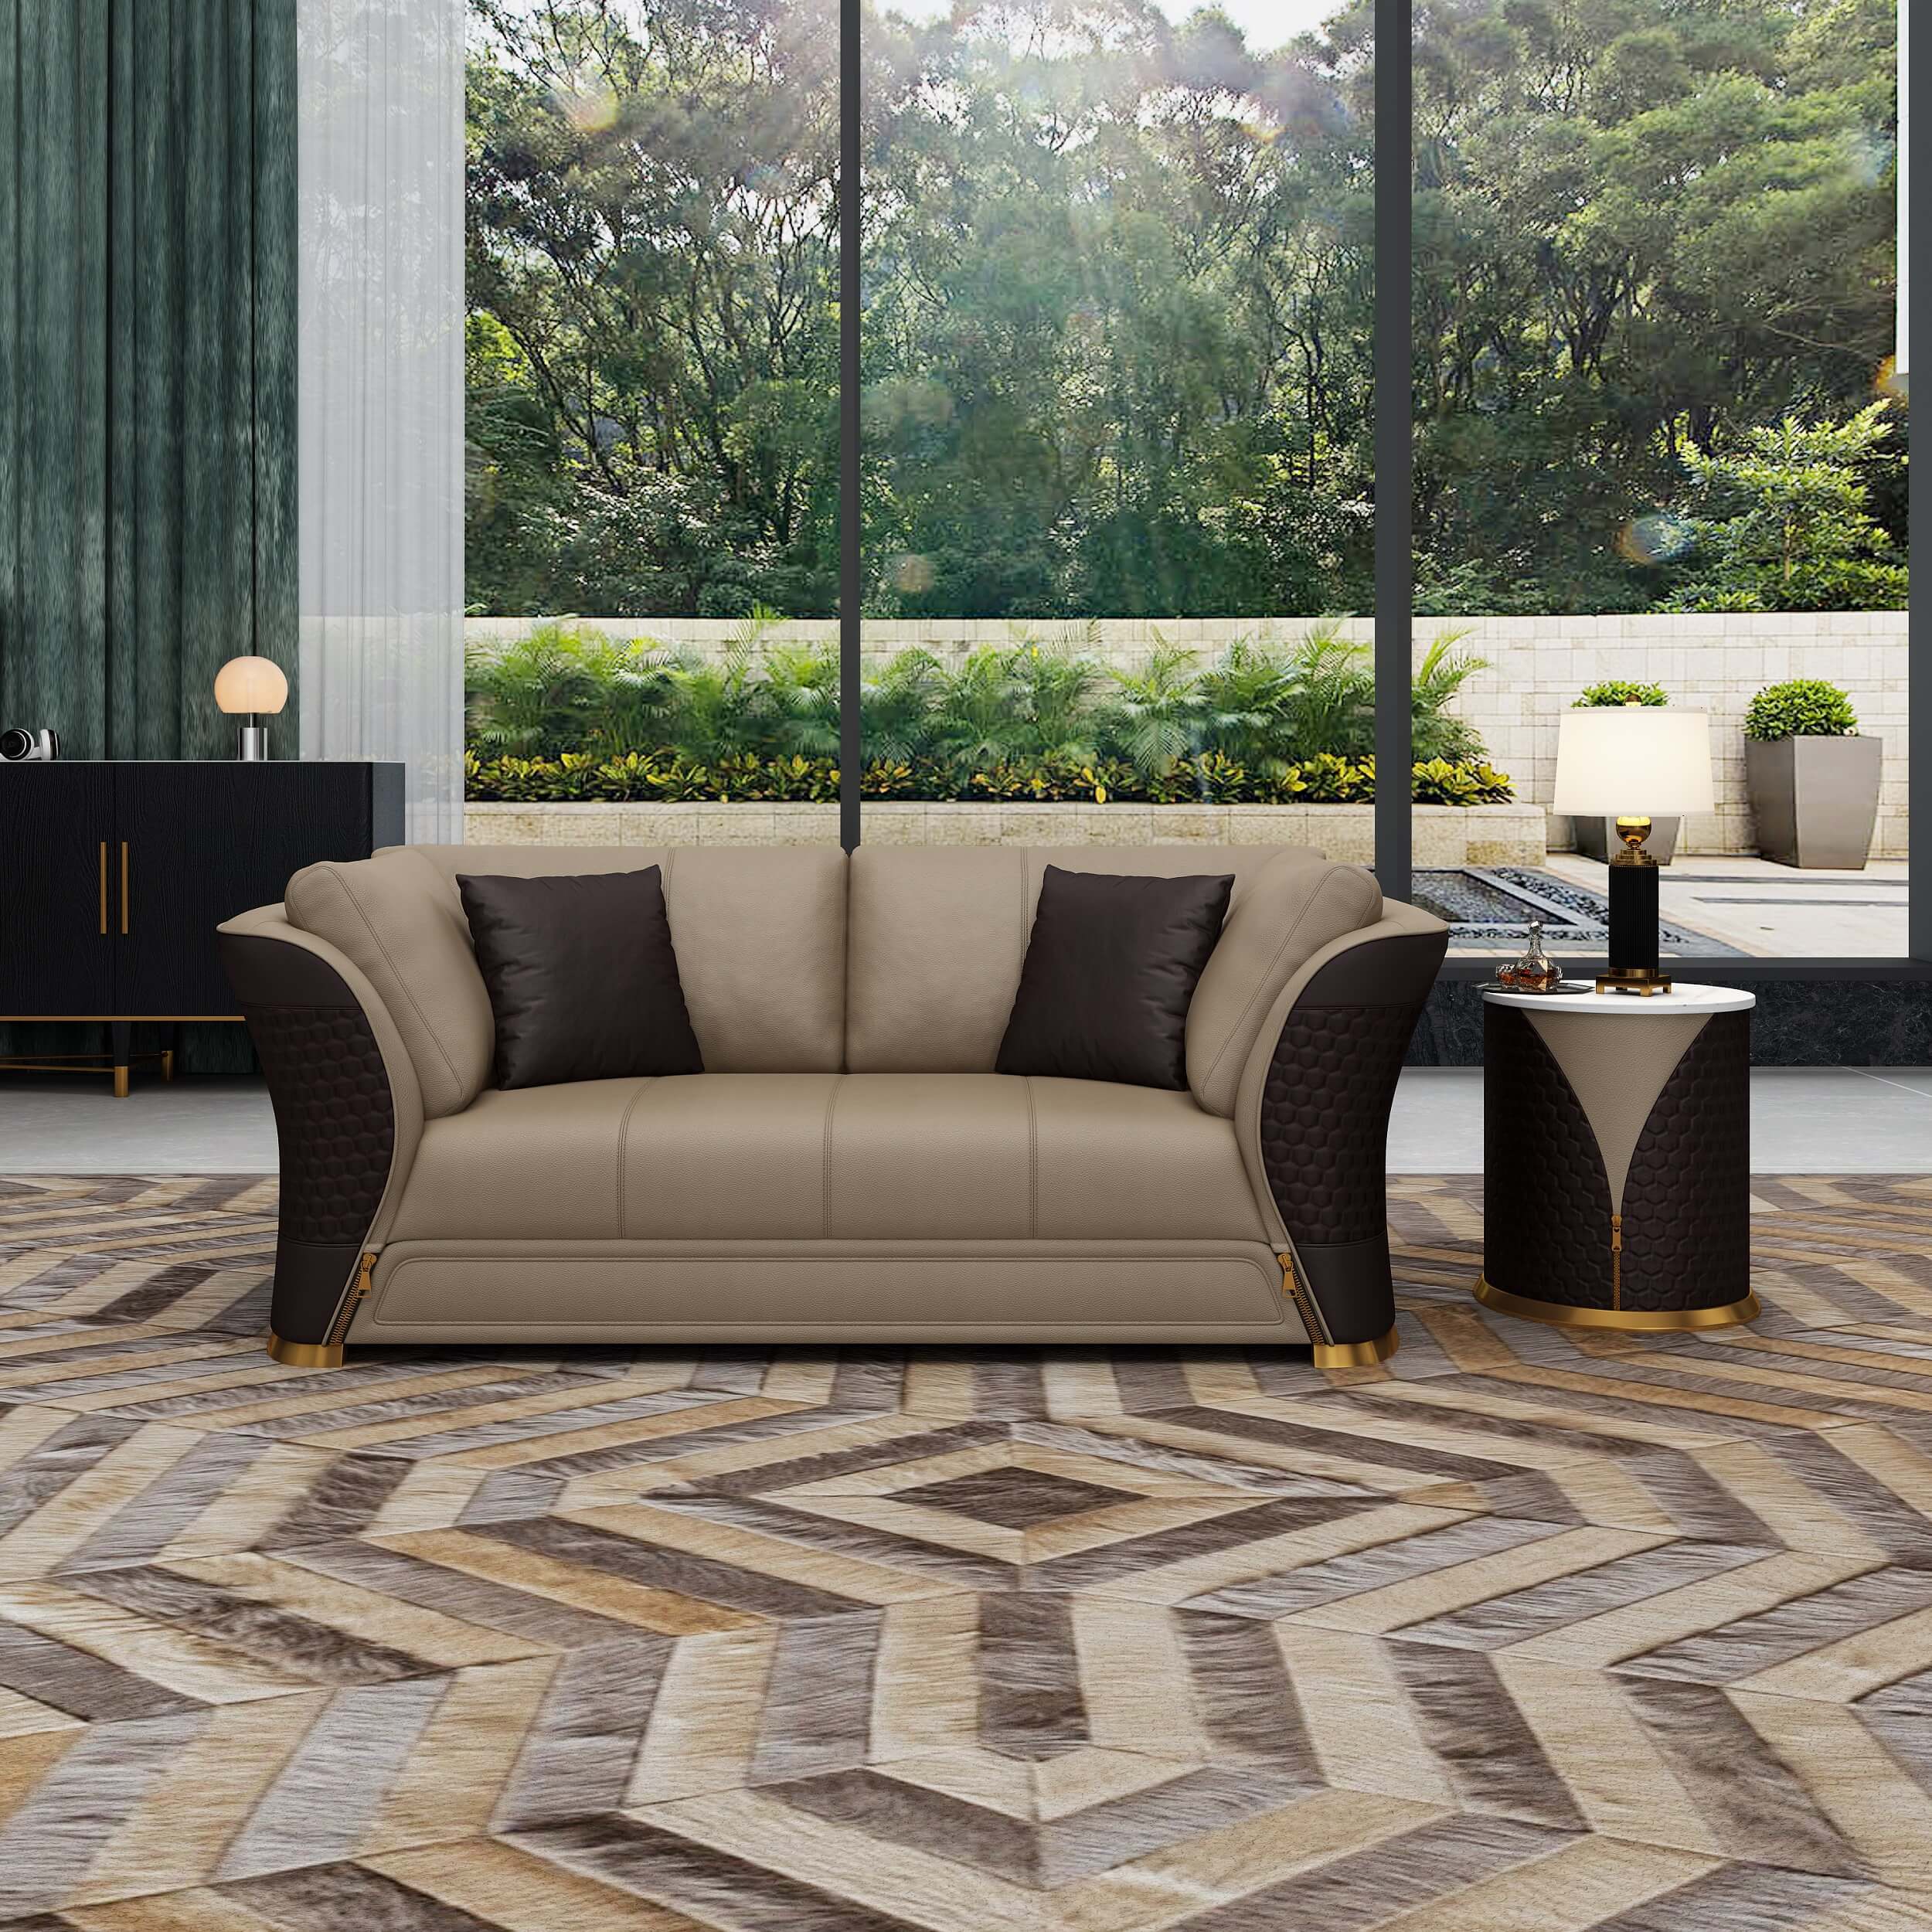 European Furniture - Vogue 3 Piece Sofa Set Sand Beige-Chocolate Italian Leather - EF-27990 - New Star Living